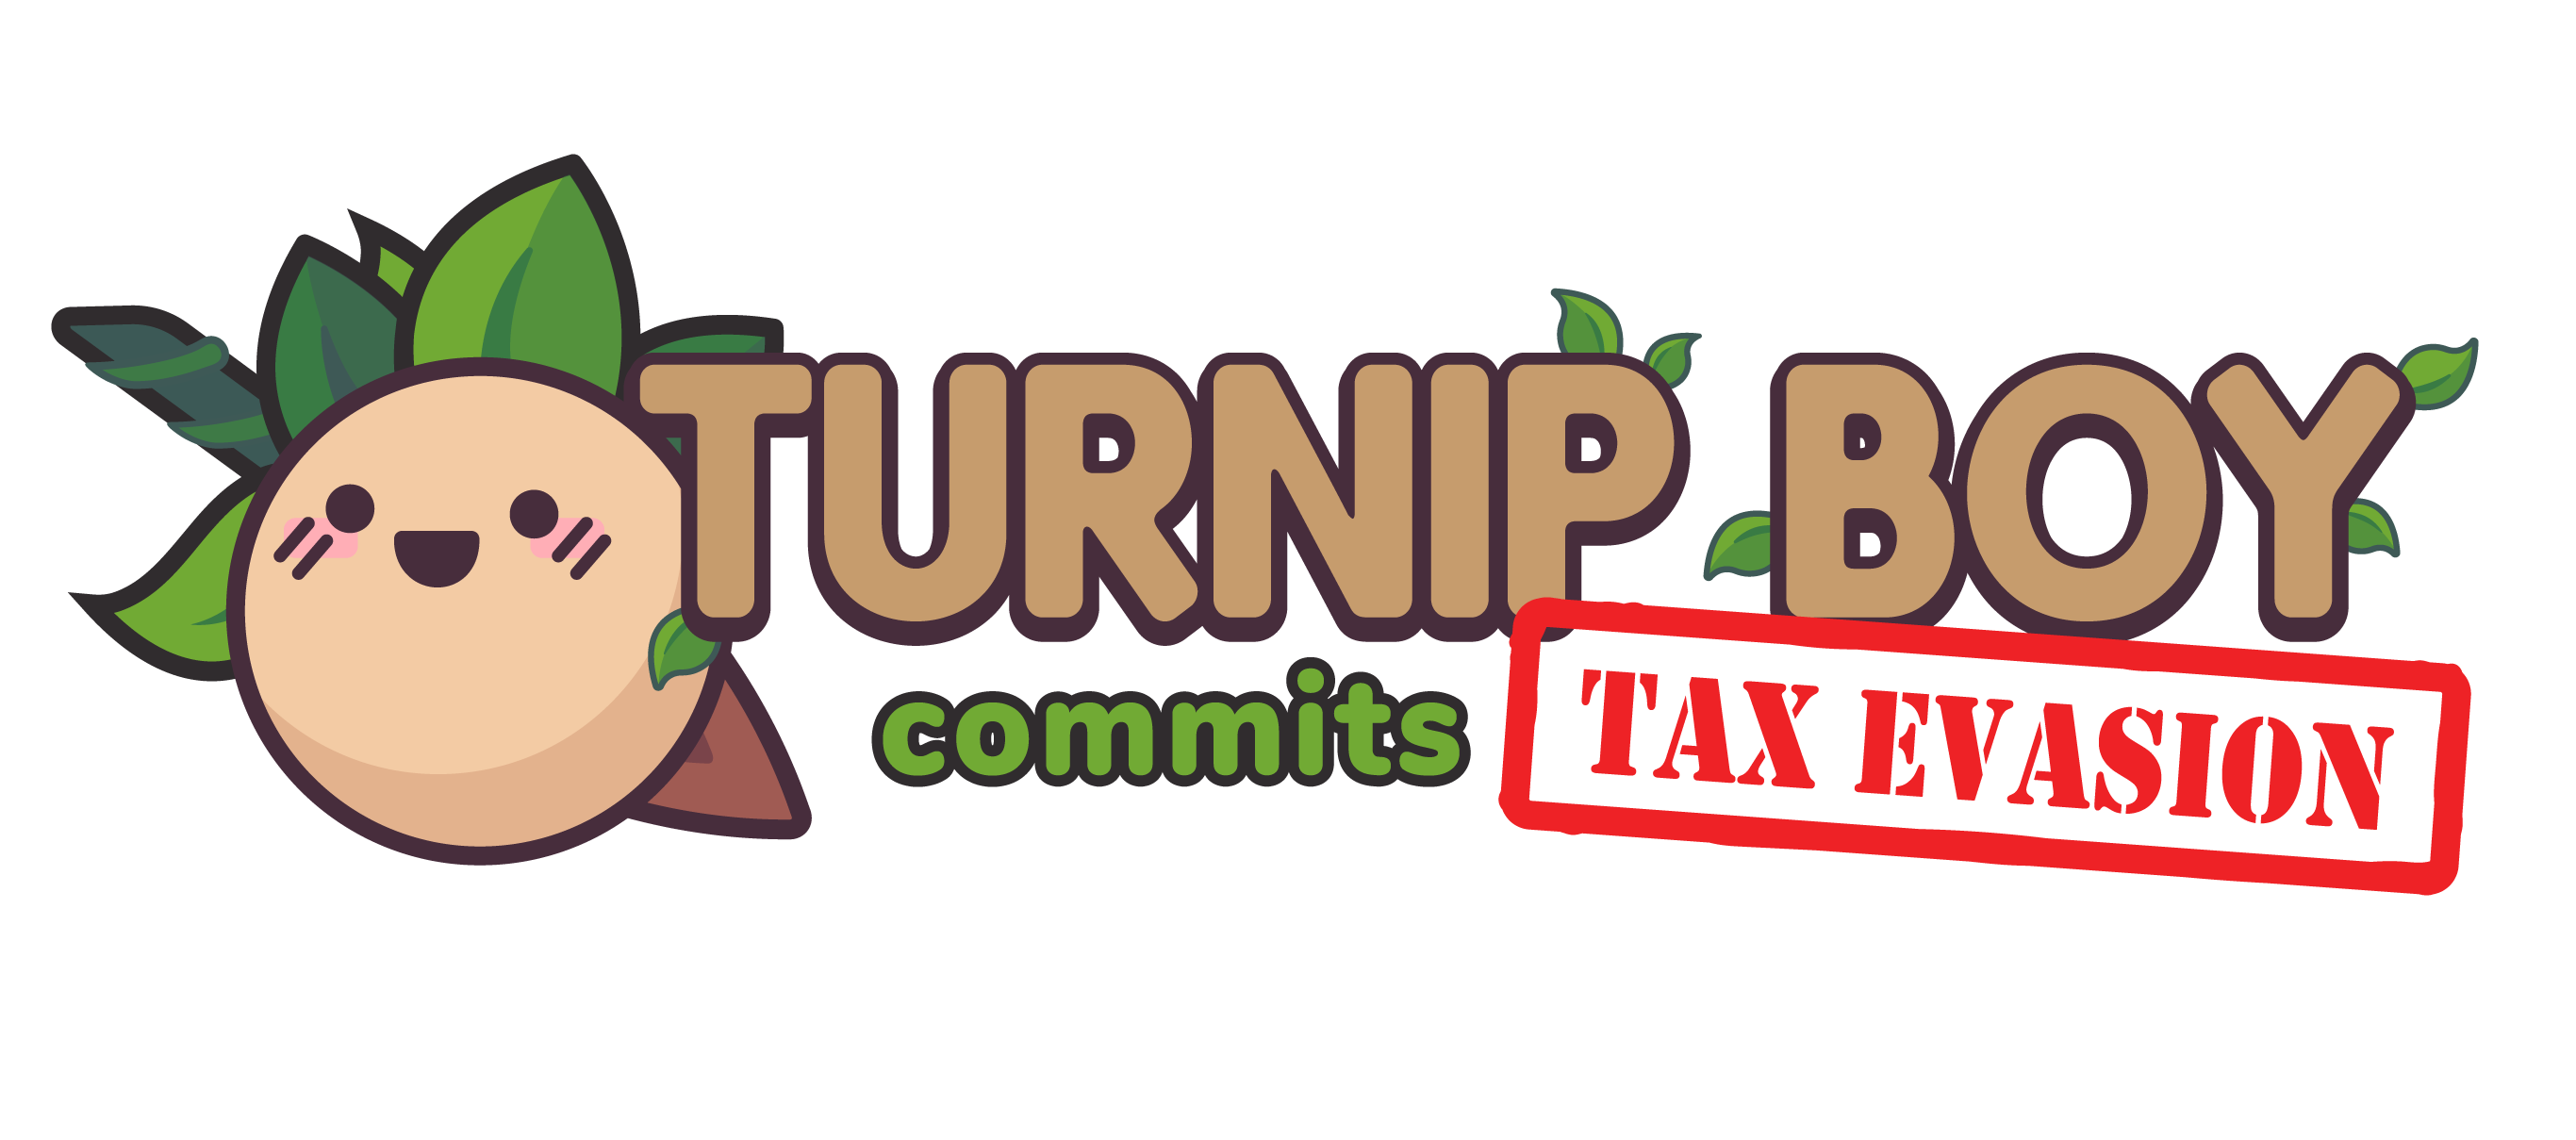 turnip boy commits tax evasion switch